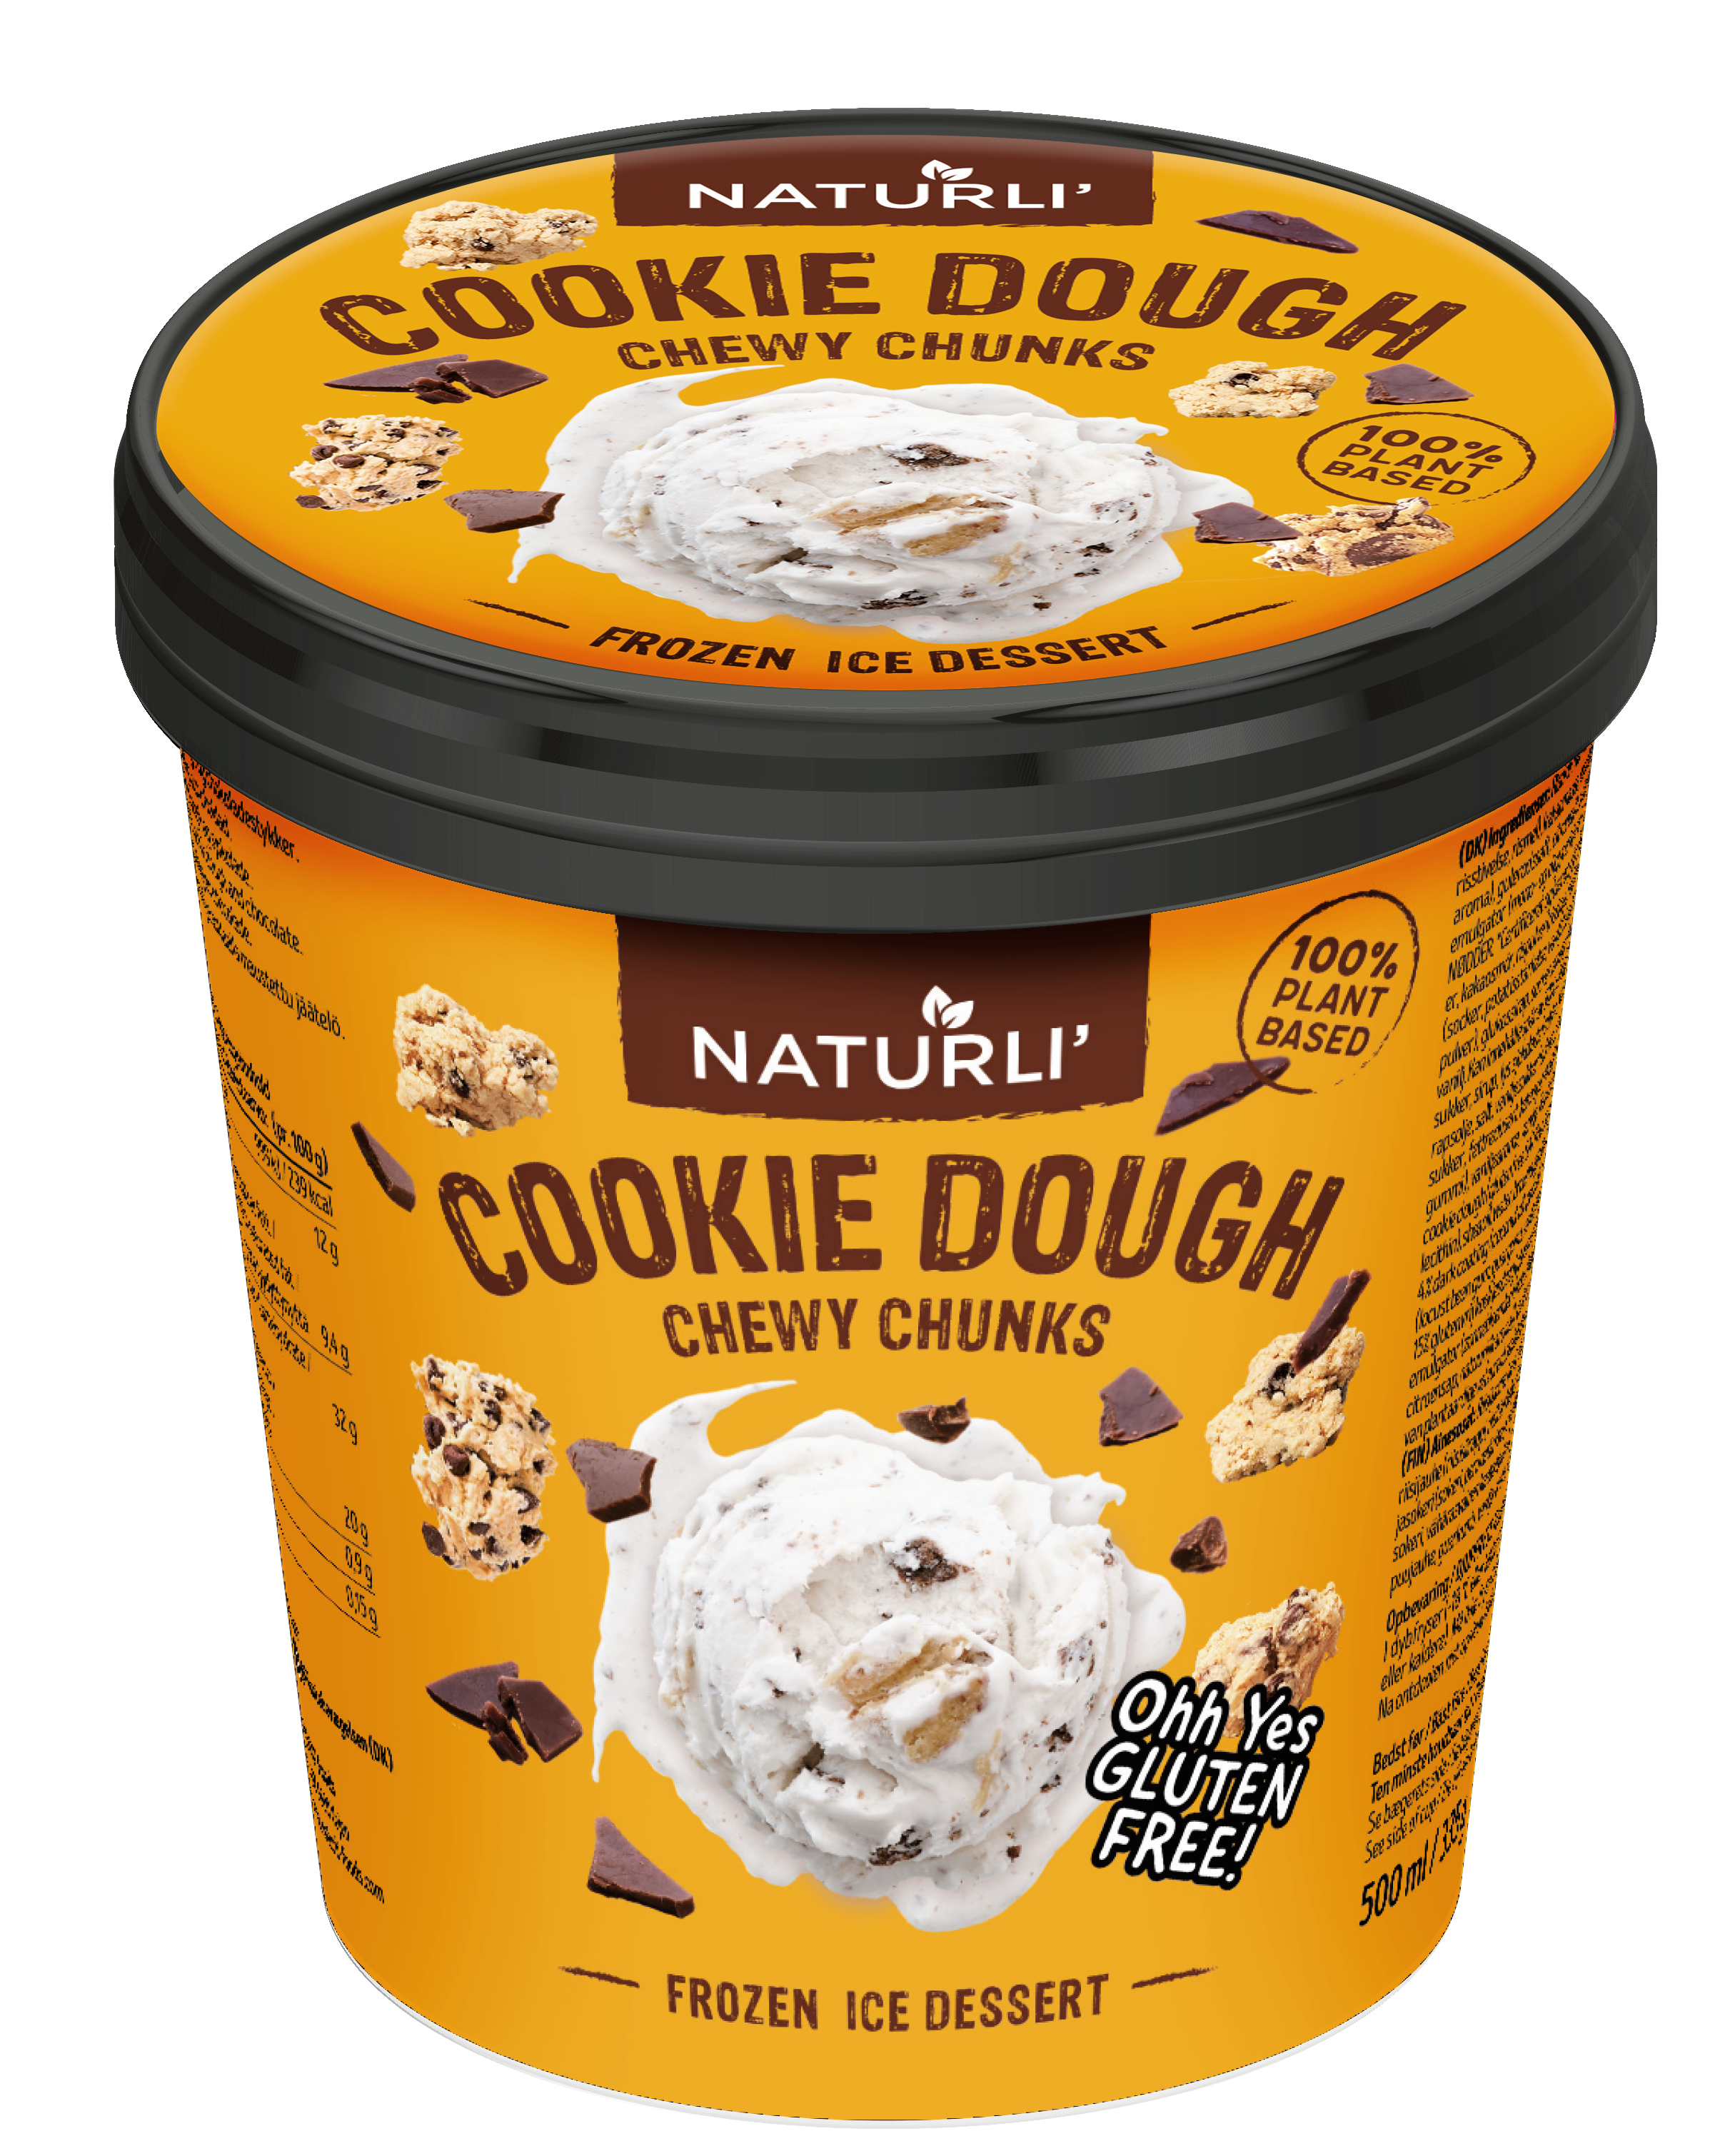 NATURLI’ Cookie Dough